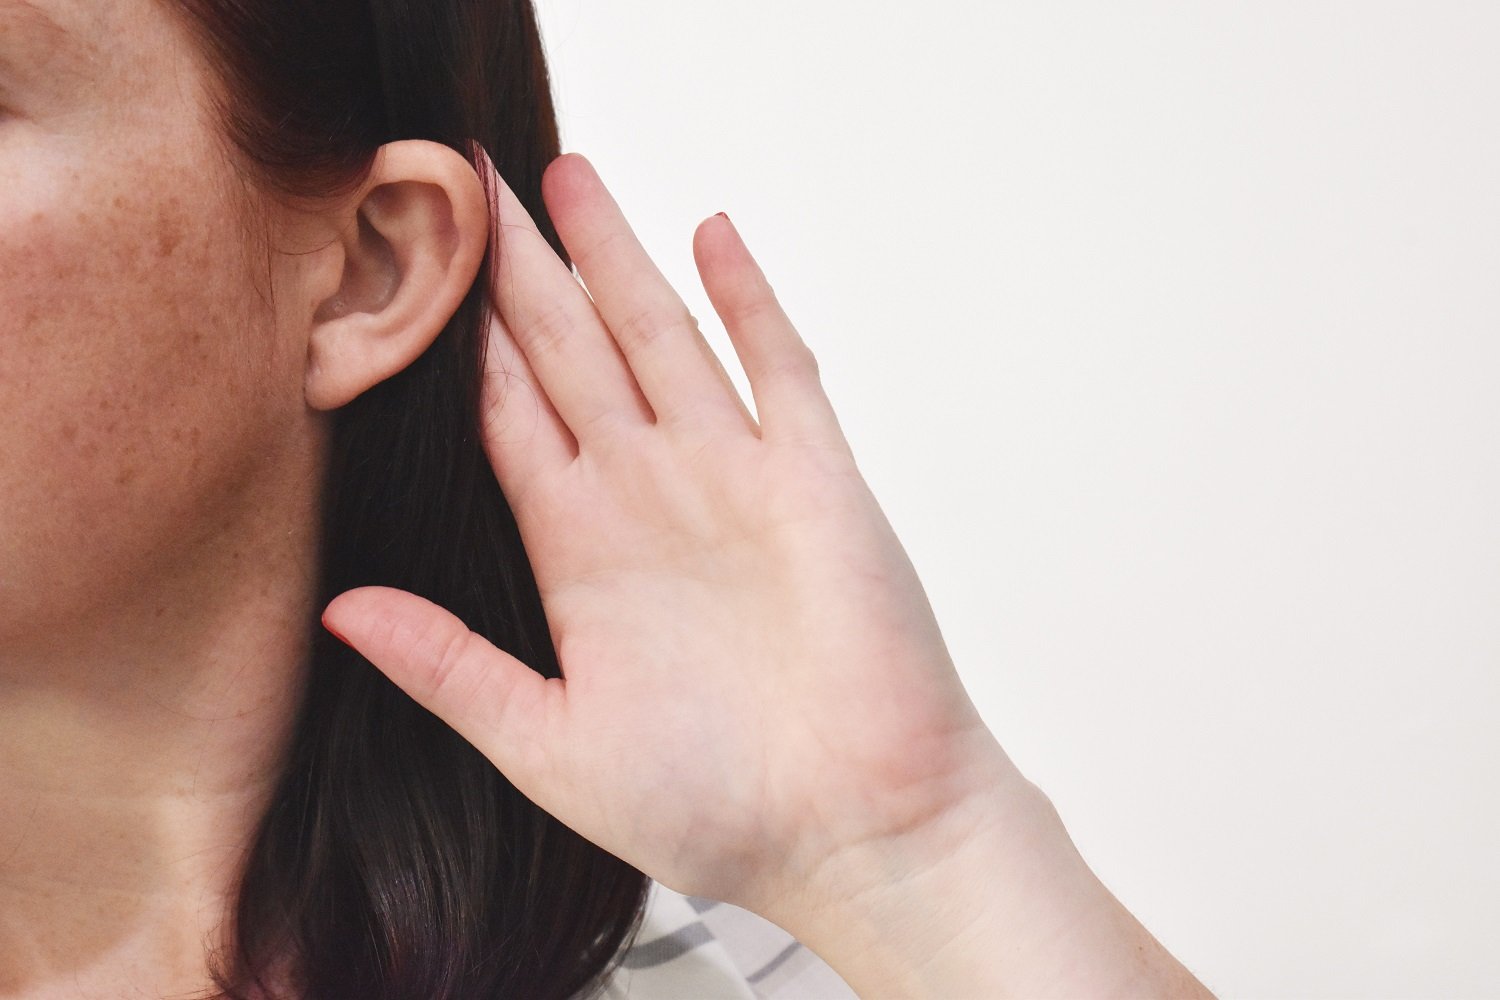 Signs and Symptoms of Hearing Loss